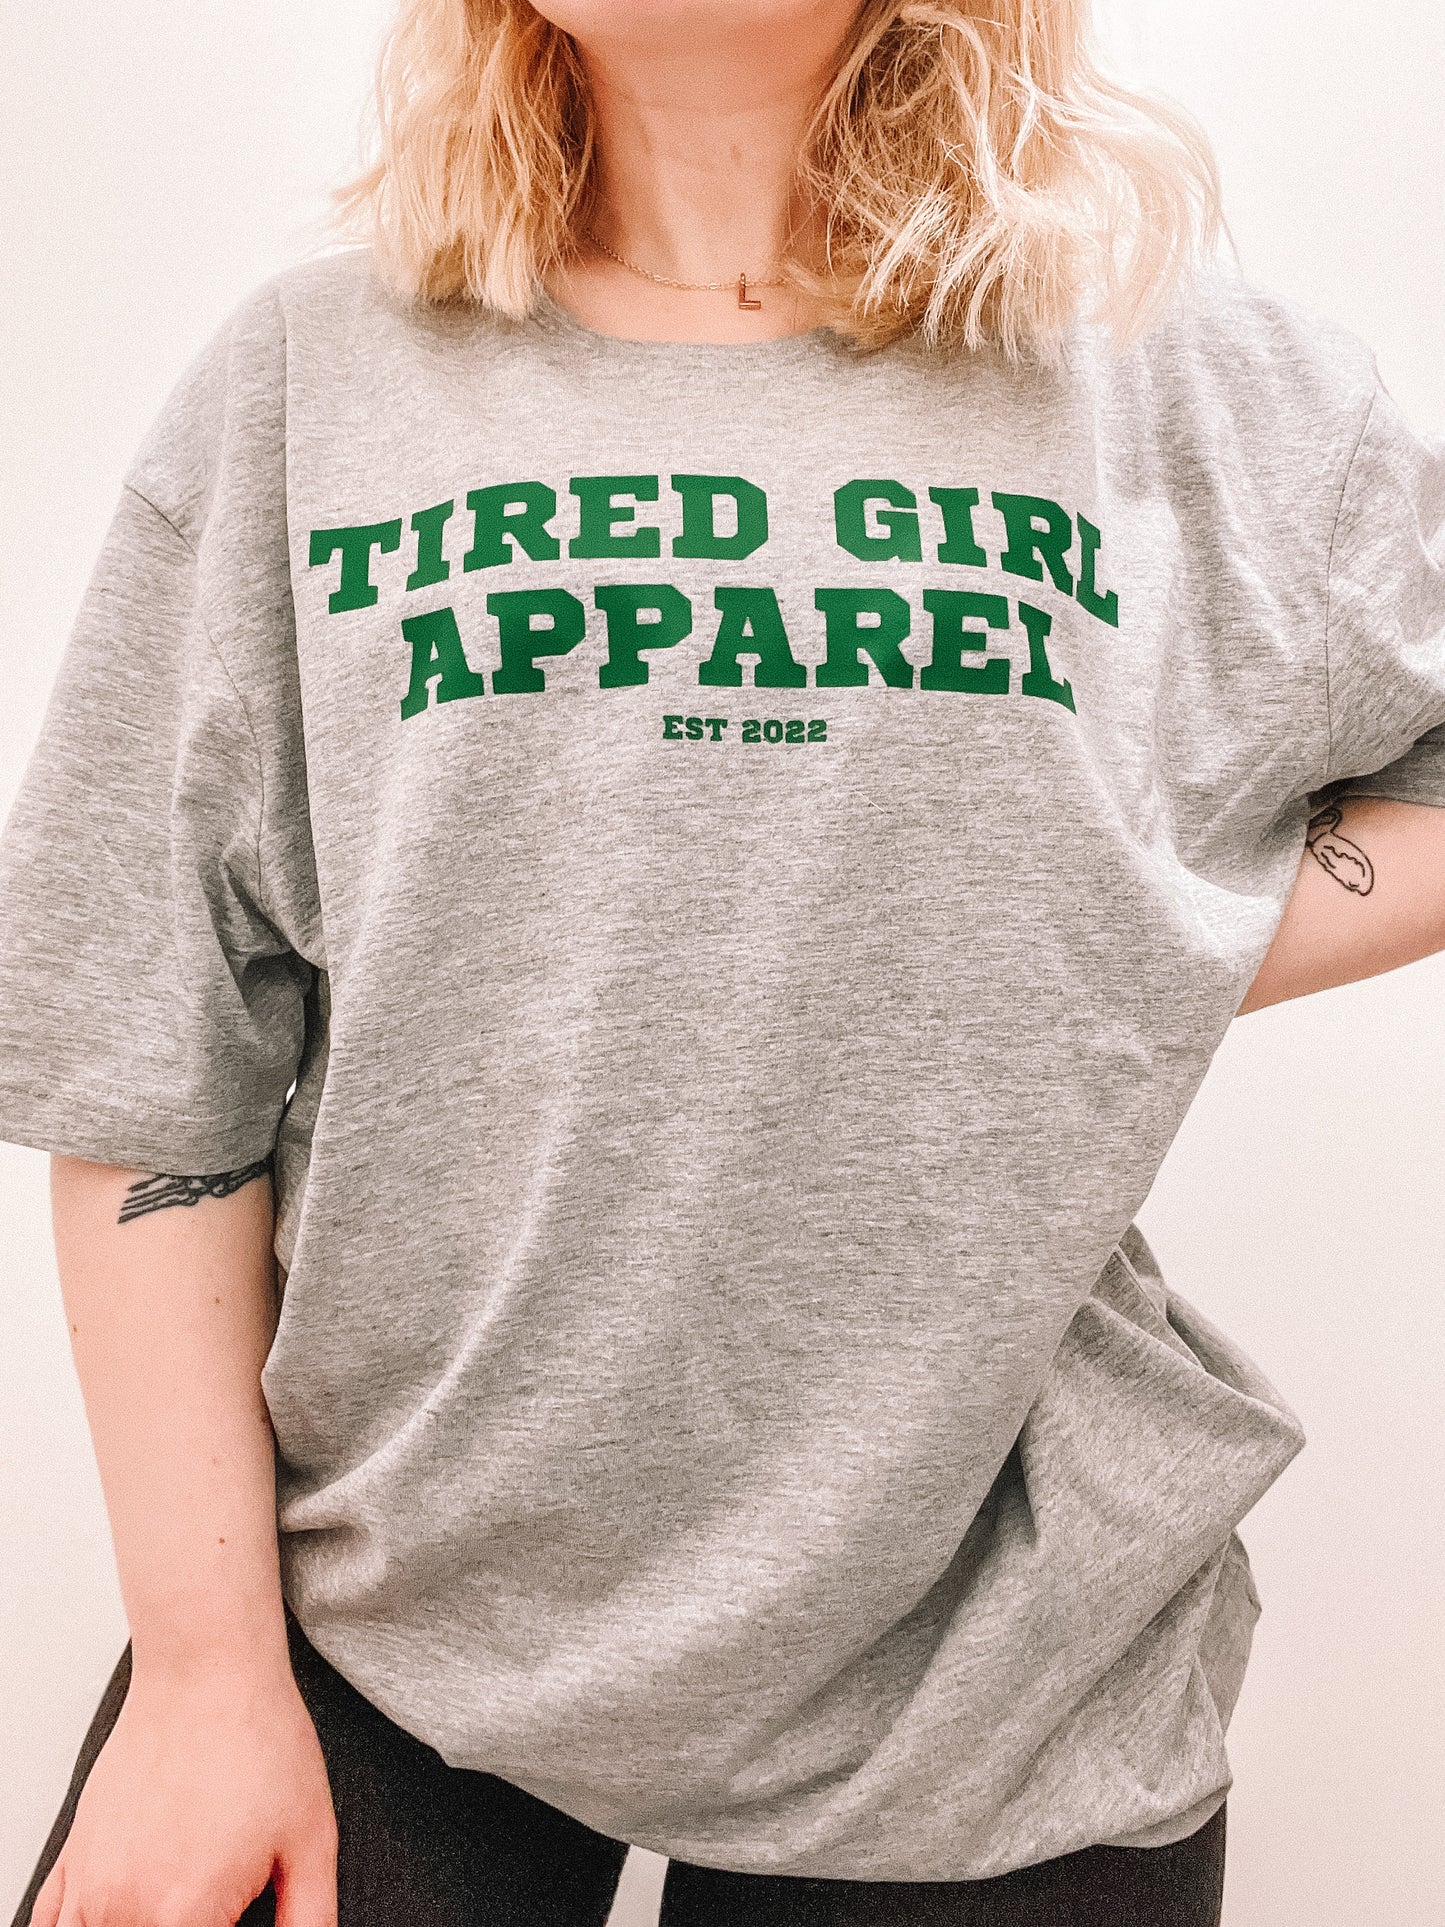 Tired Girl Apparel Printed T-shirt